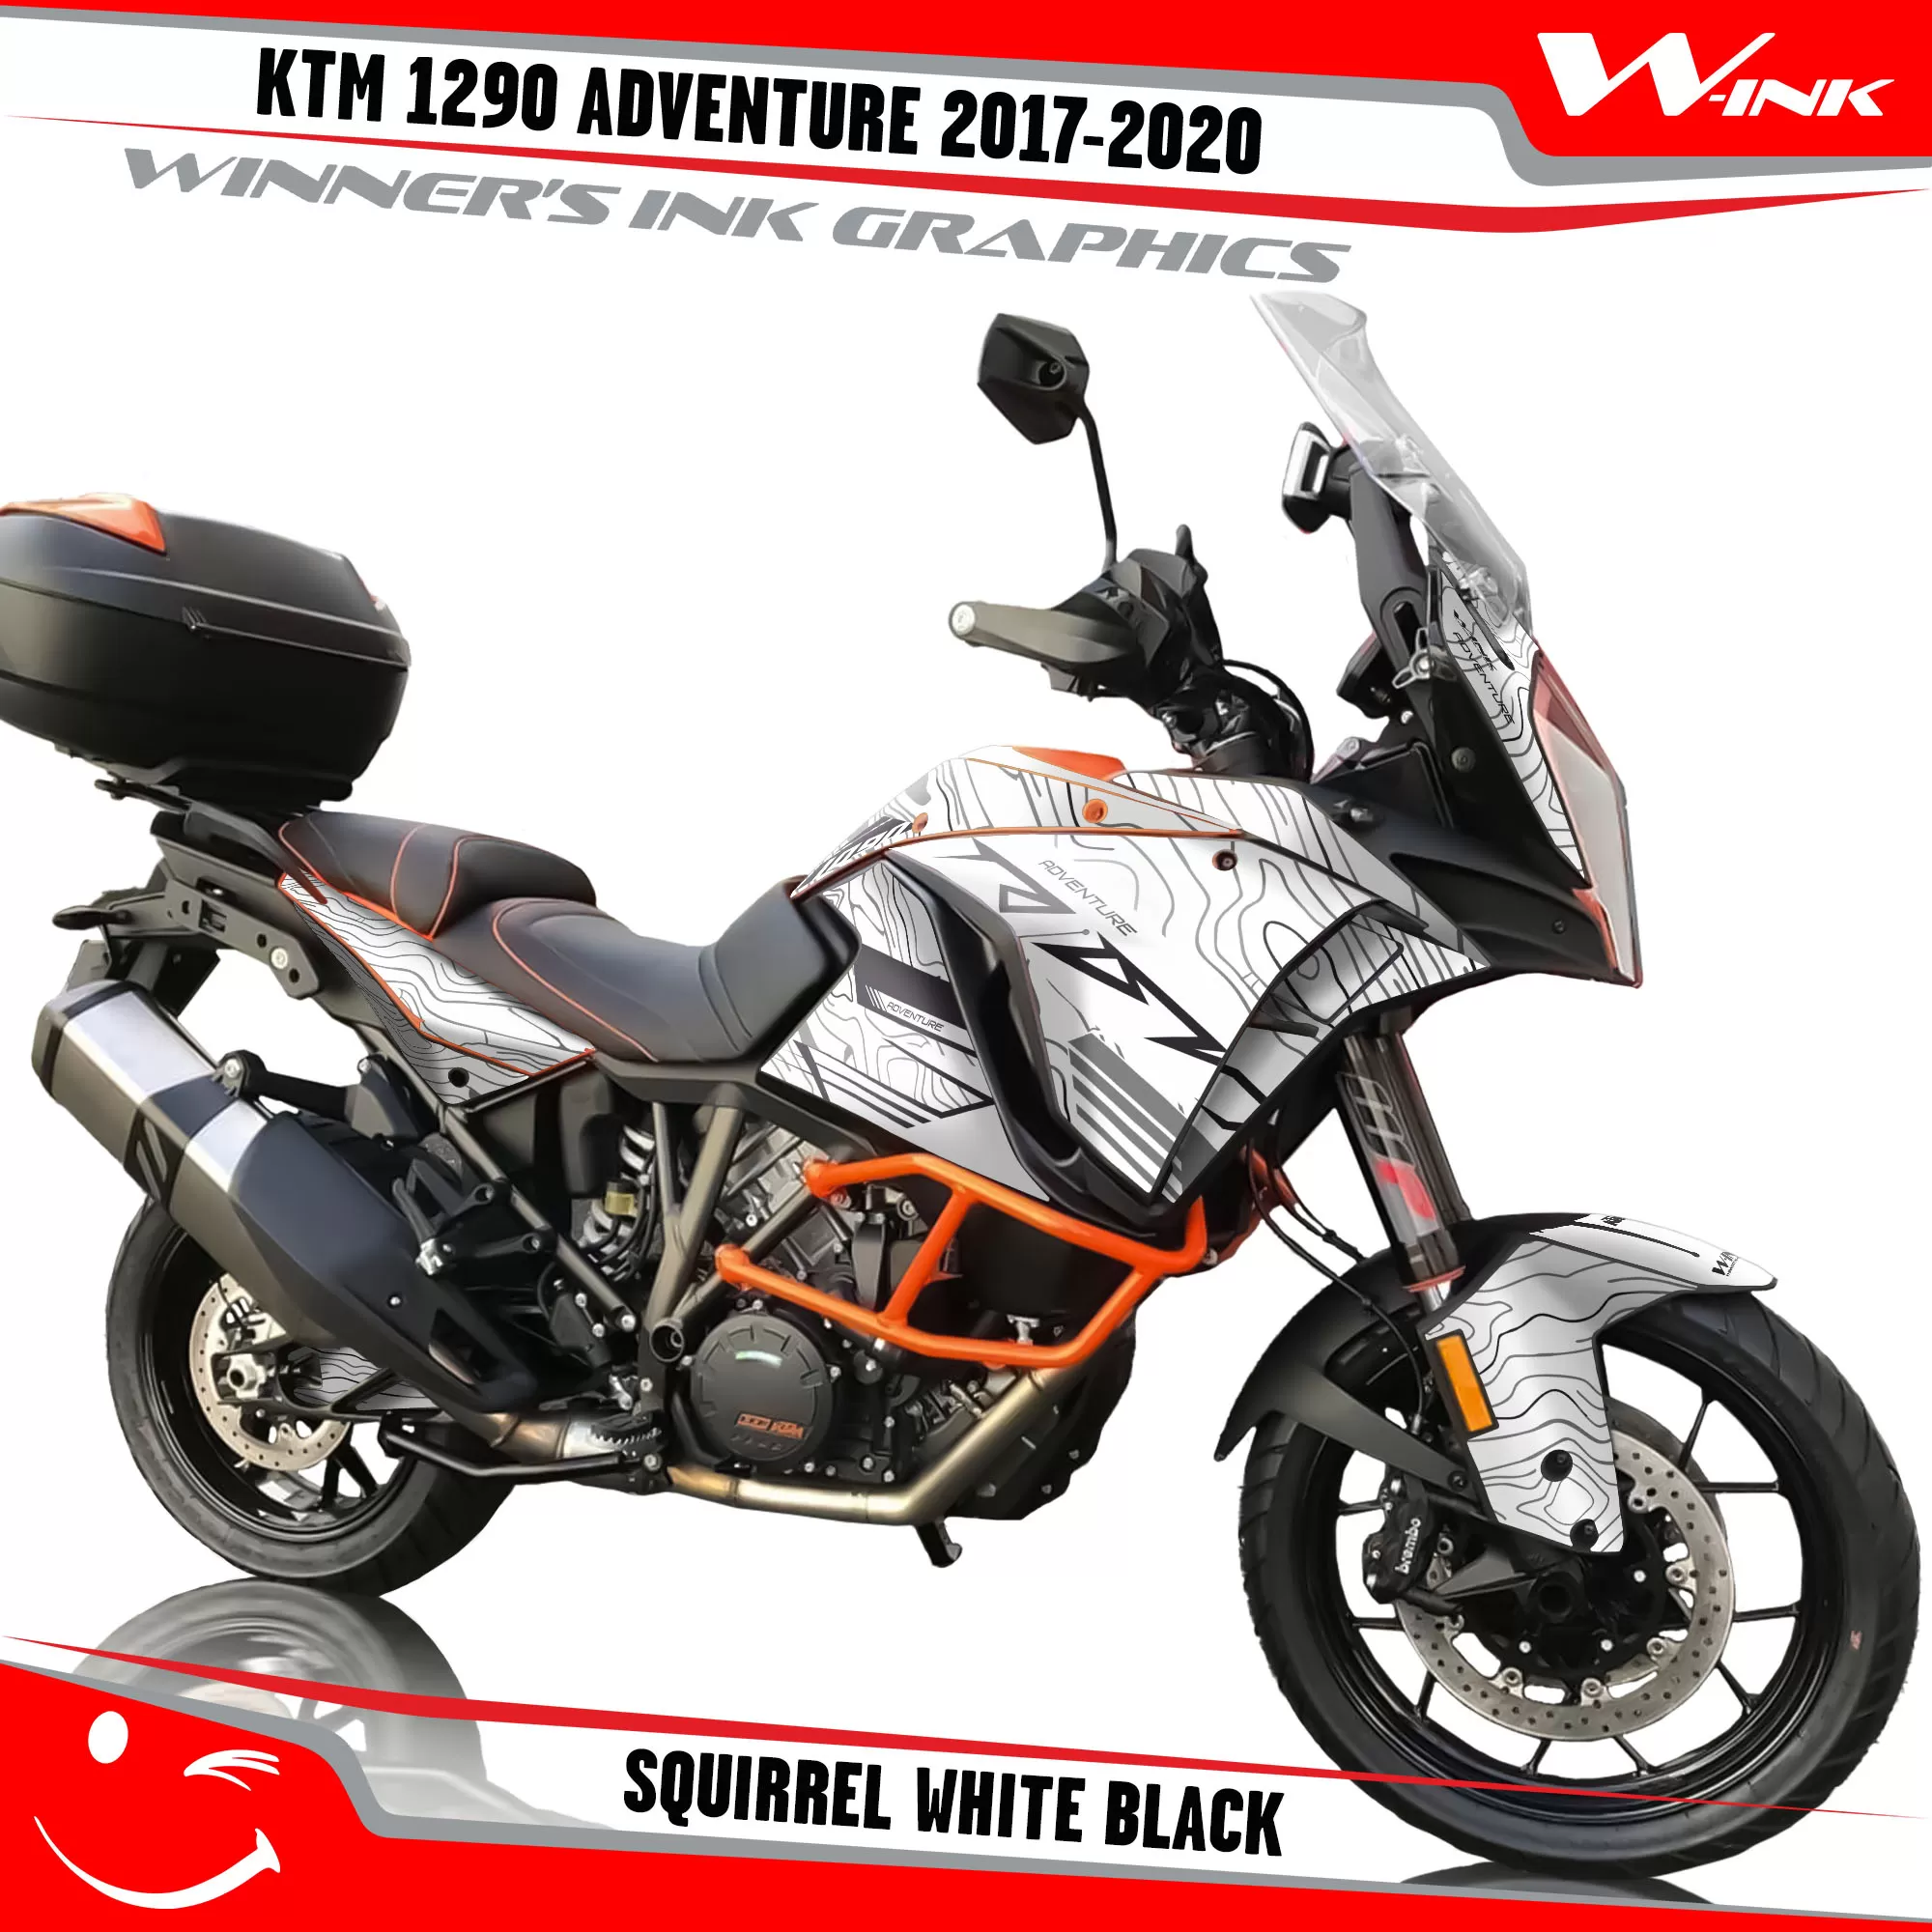 KTM-Adventure-1290-2017-2018-2019-2020-graphics-kit-and-decals-Squirrel-White-Black